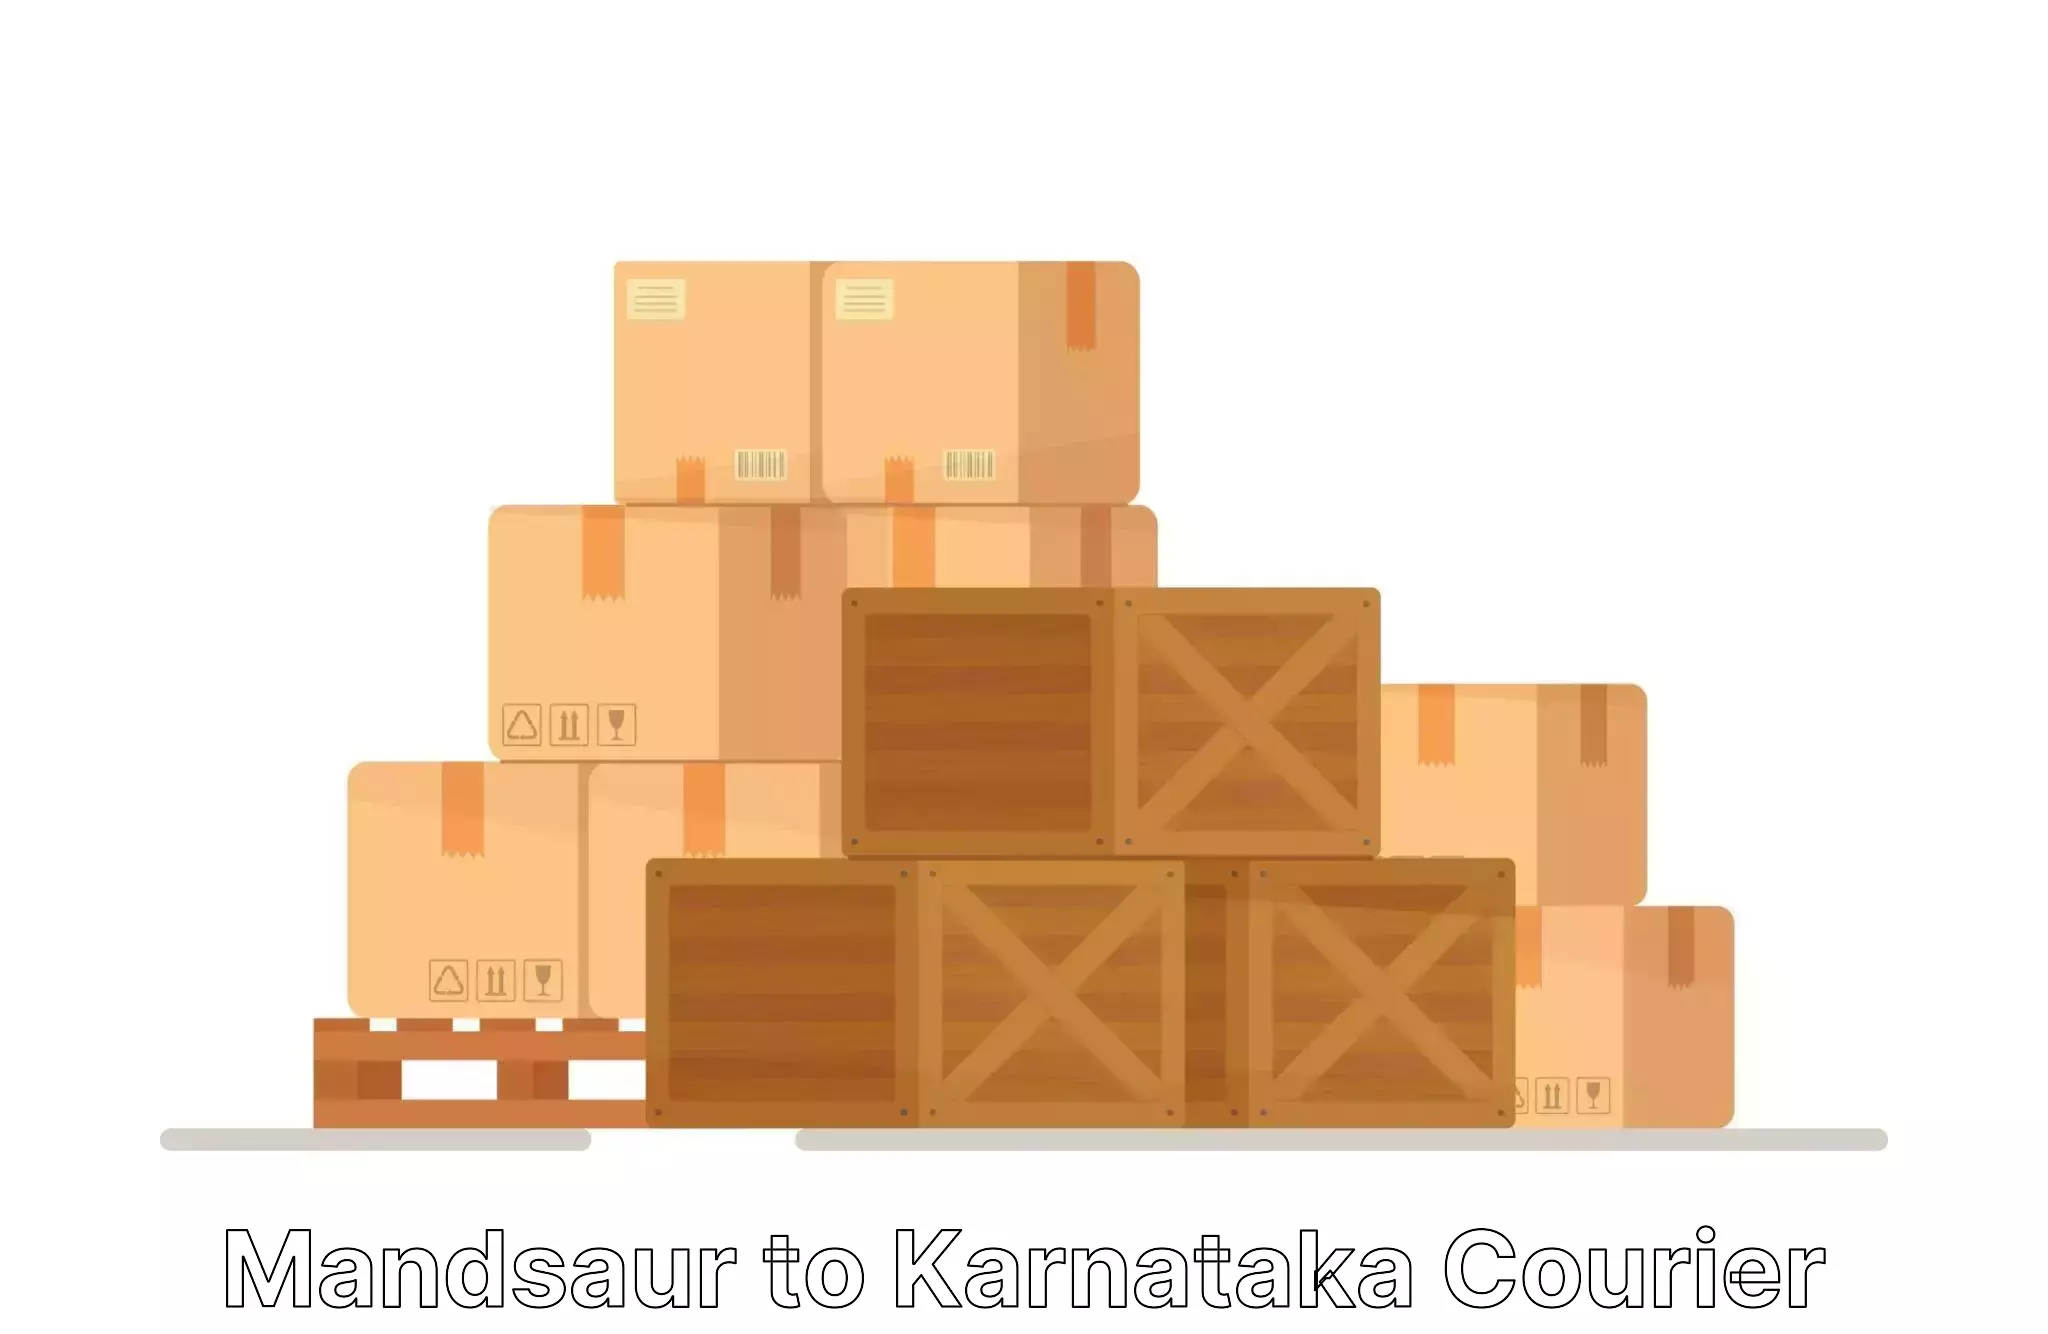 Home relocation experts Mandsaur to Karnataka